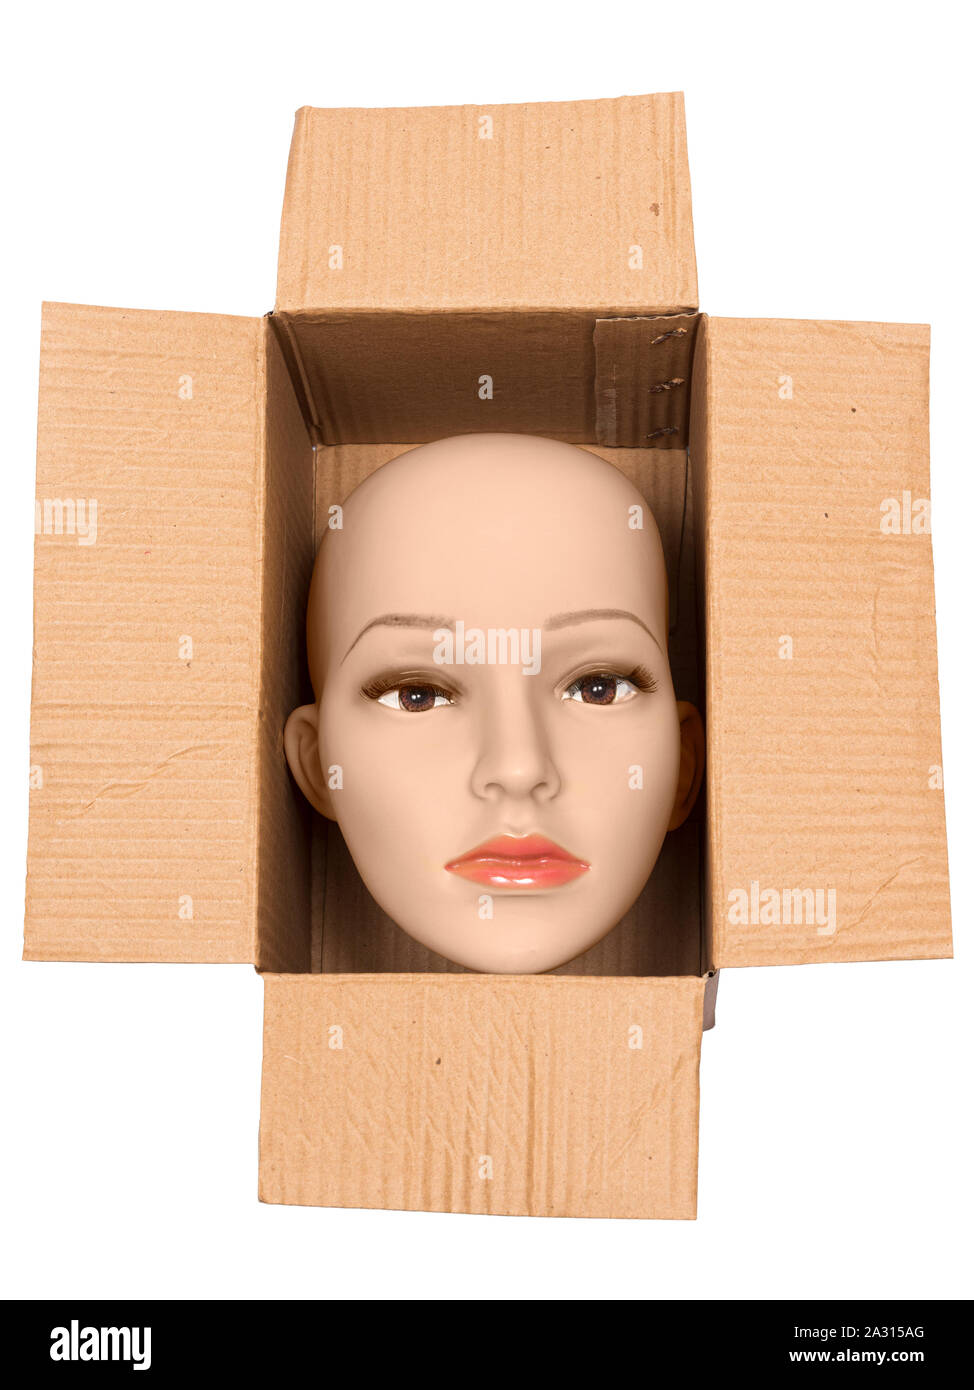 Vertical shot of a bald woman mannequin head inside an open cardboard box. White background. Stock Photo